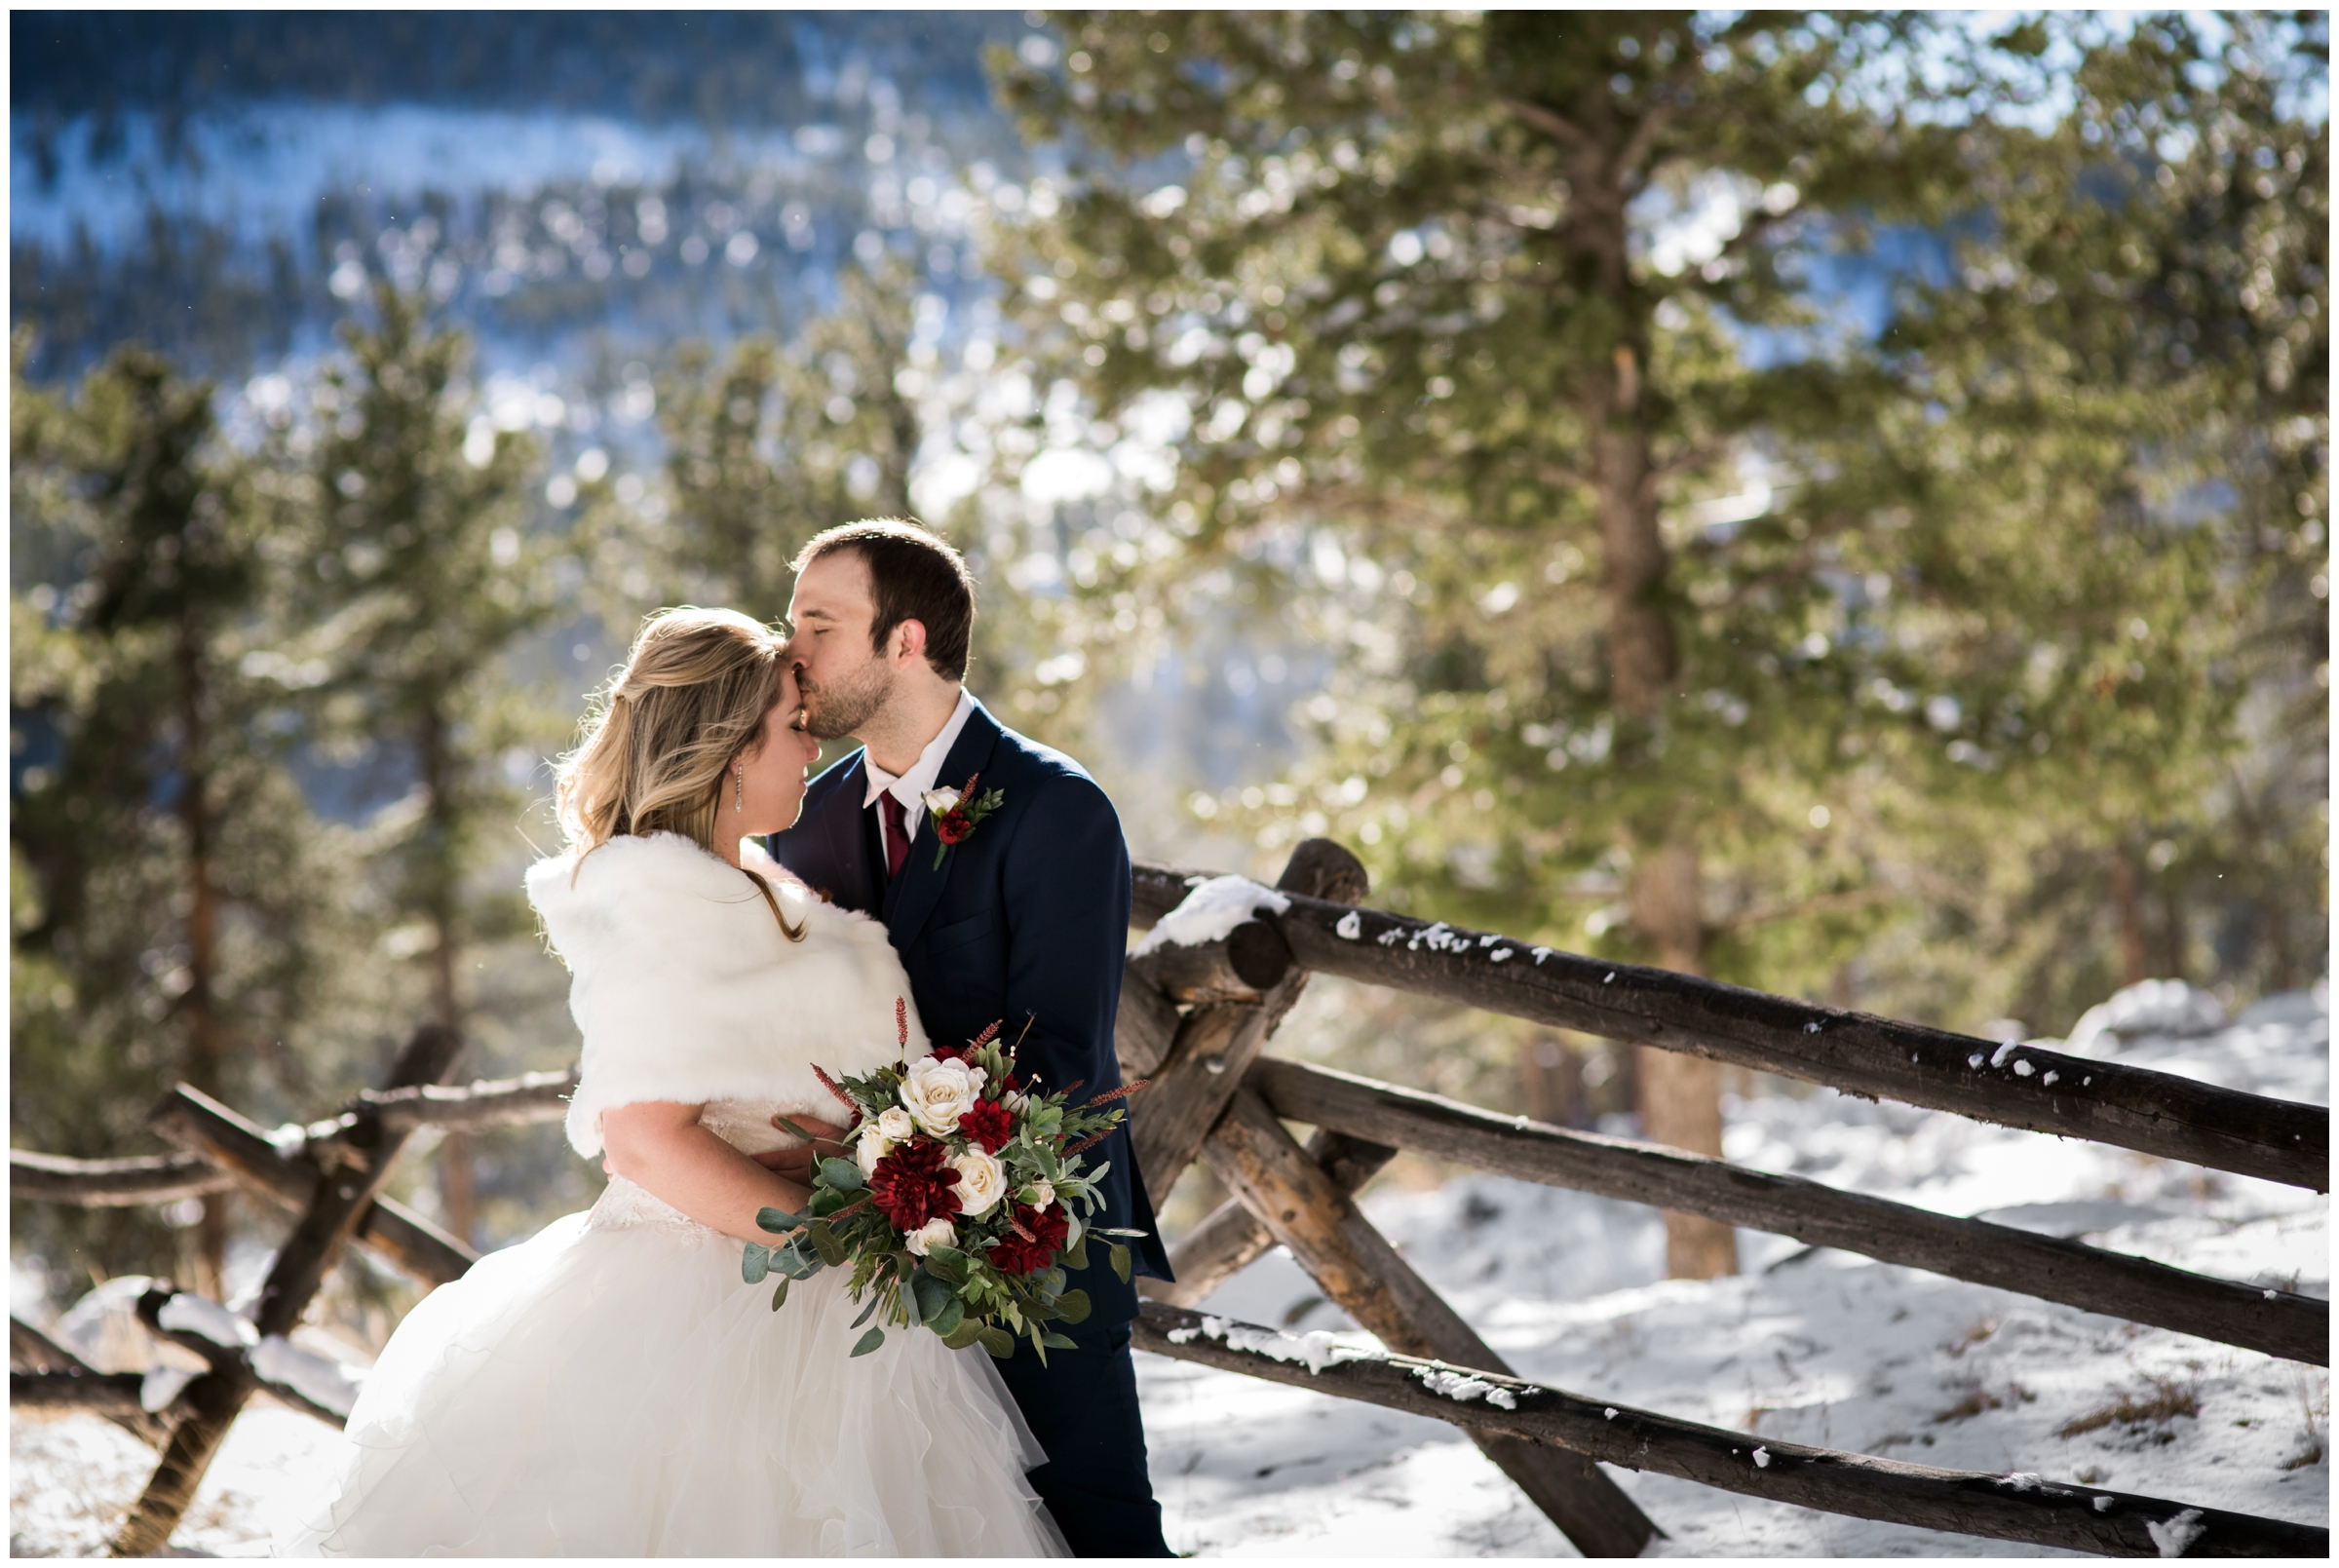 snowy winter Della Terra wedding photos by Estes Park Colorado photographer Plum Pretty Photography